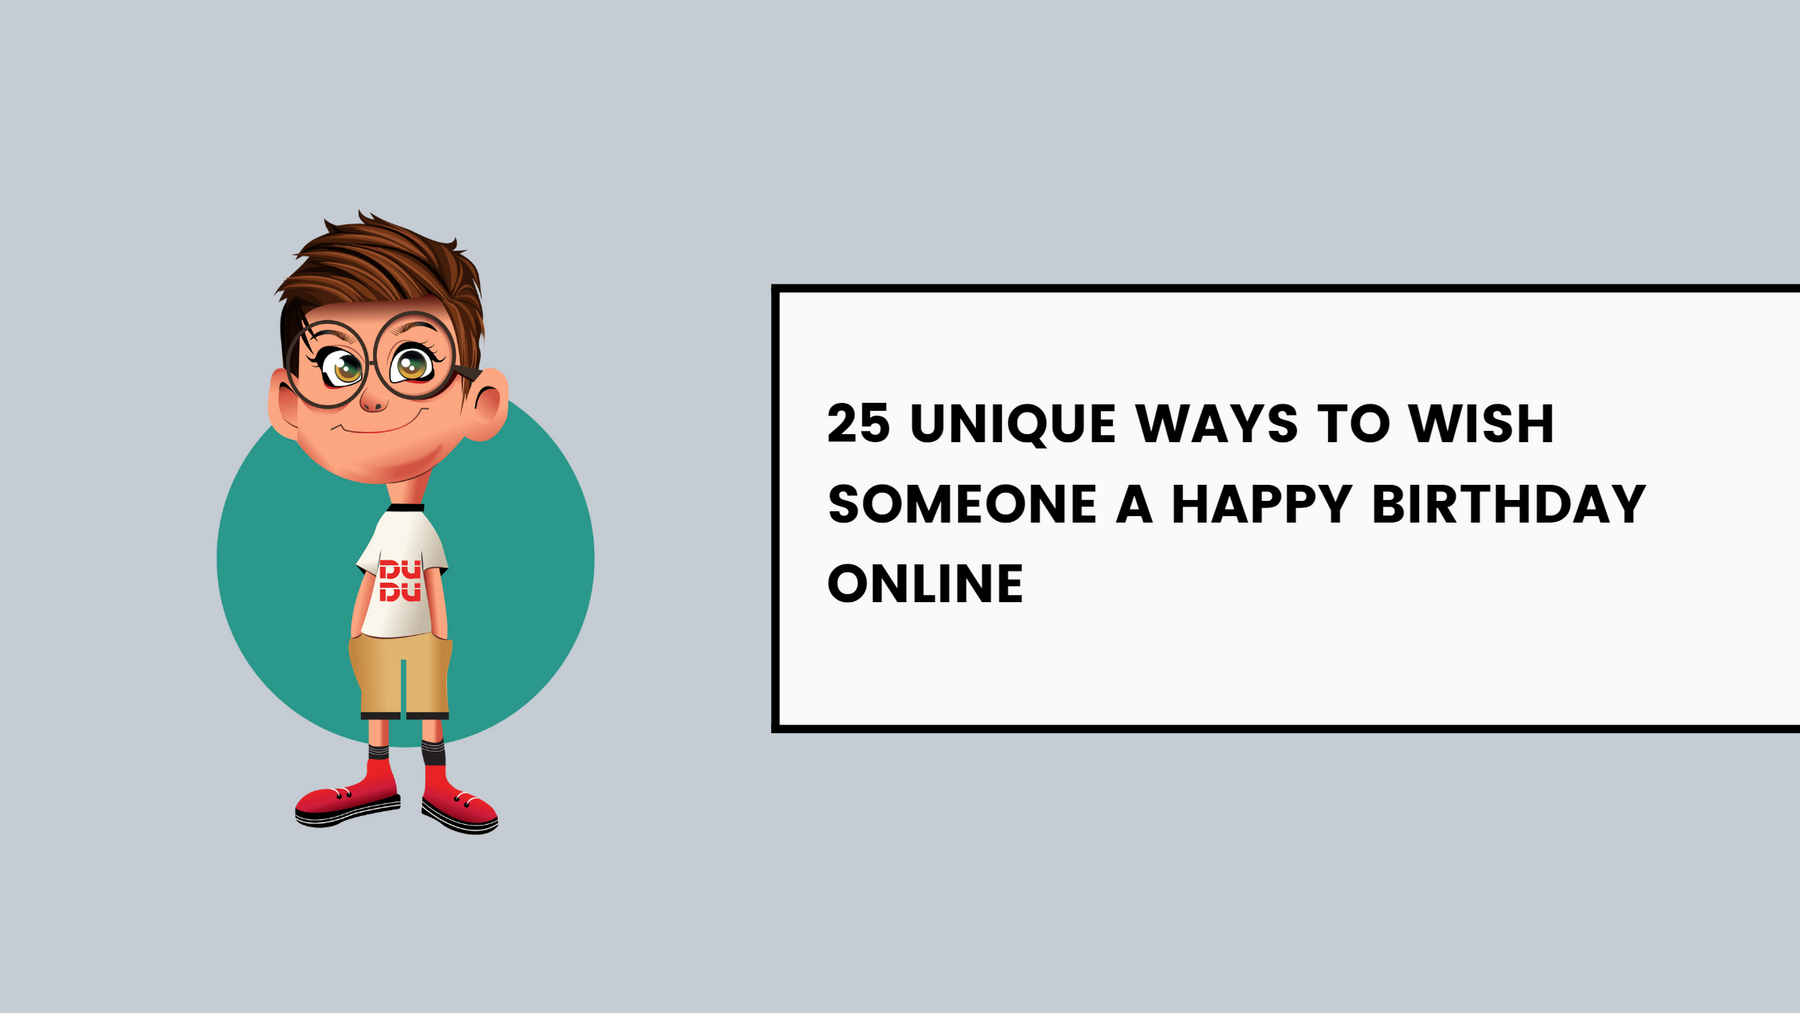 25 Unique Ways to Wish Someone a Happy Birthday Online